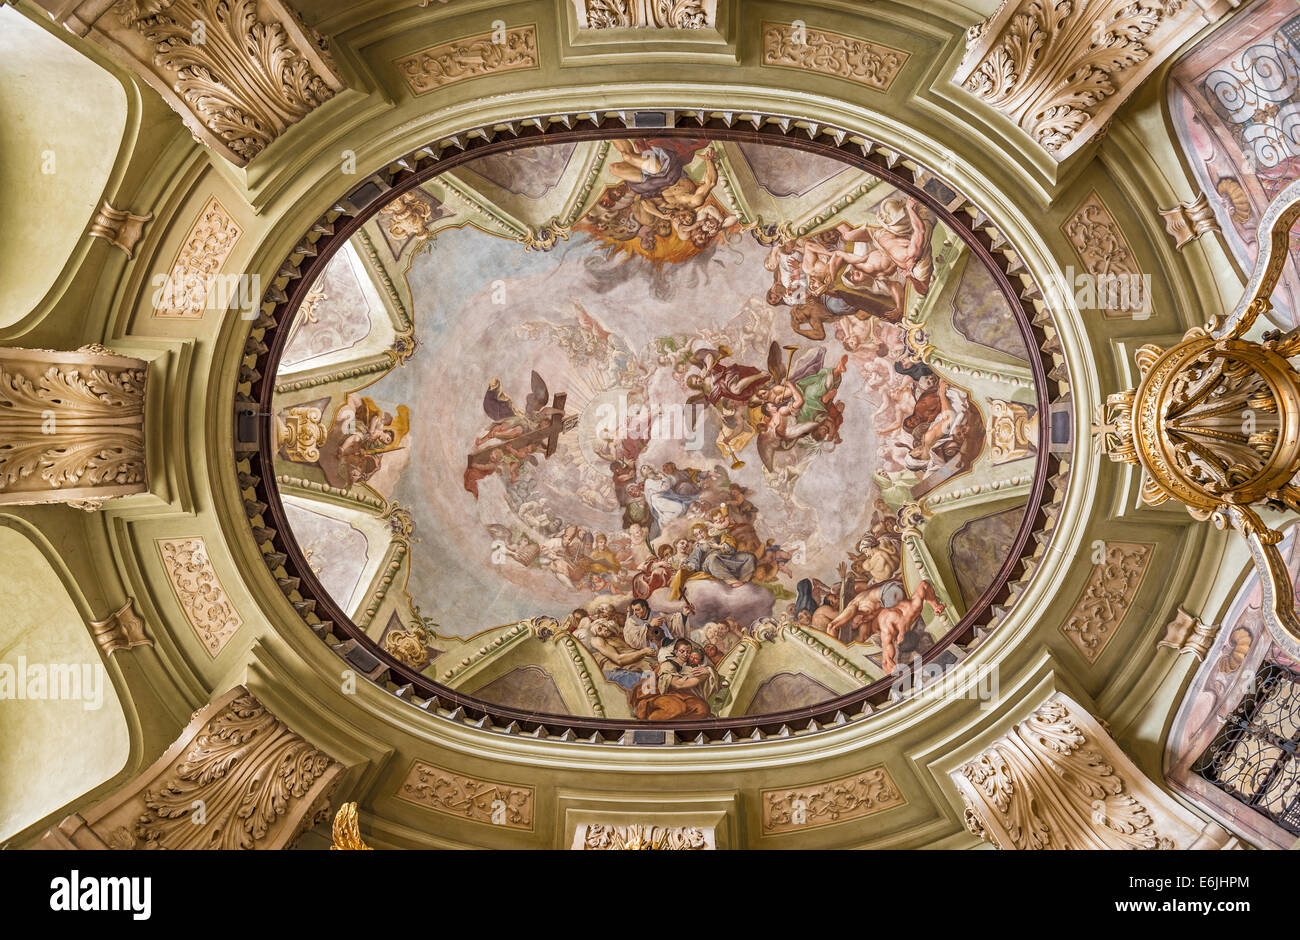 PRAGUE, CZECH REPUBLIC - AUGUST 13, 2014: Interior dome of the Baroque St. Nicholas Church on Lesser Town in Prague Stock Photo